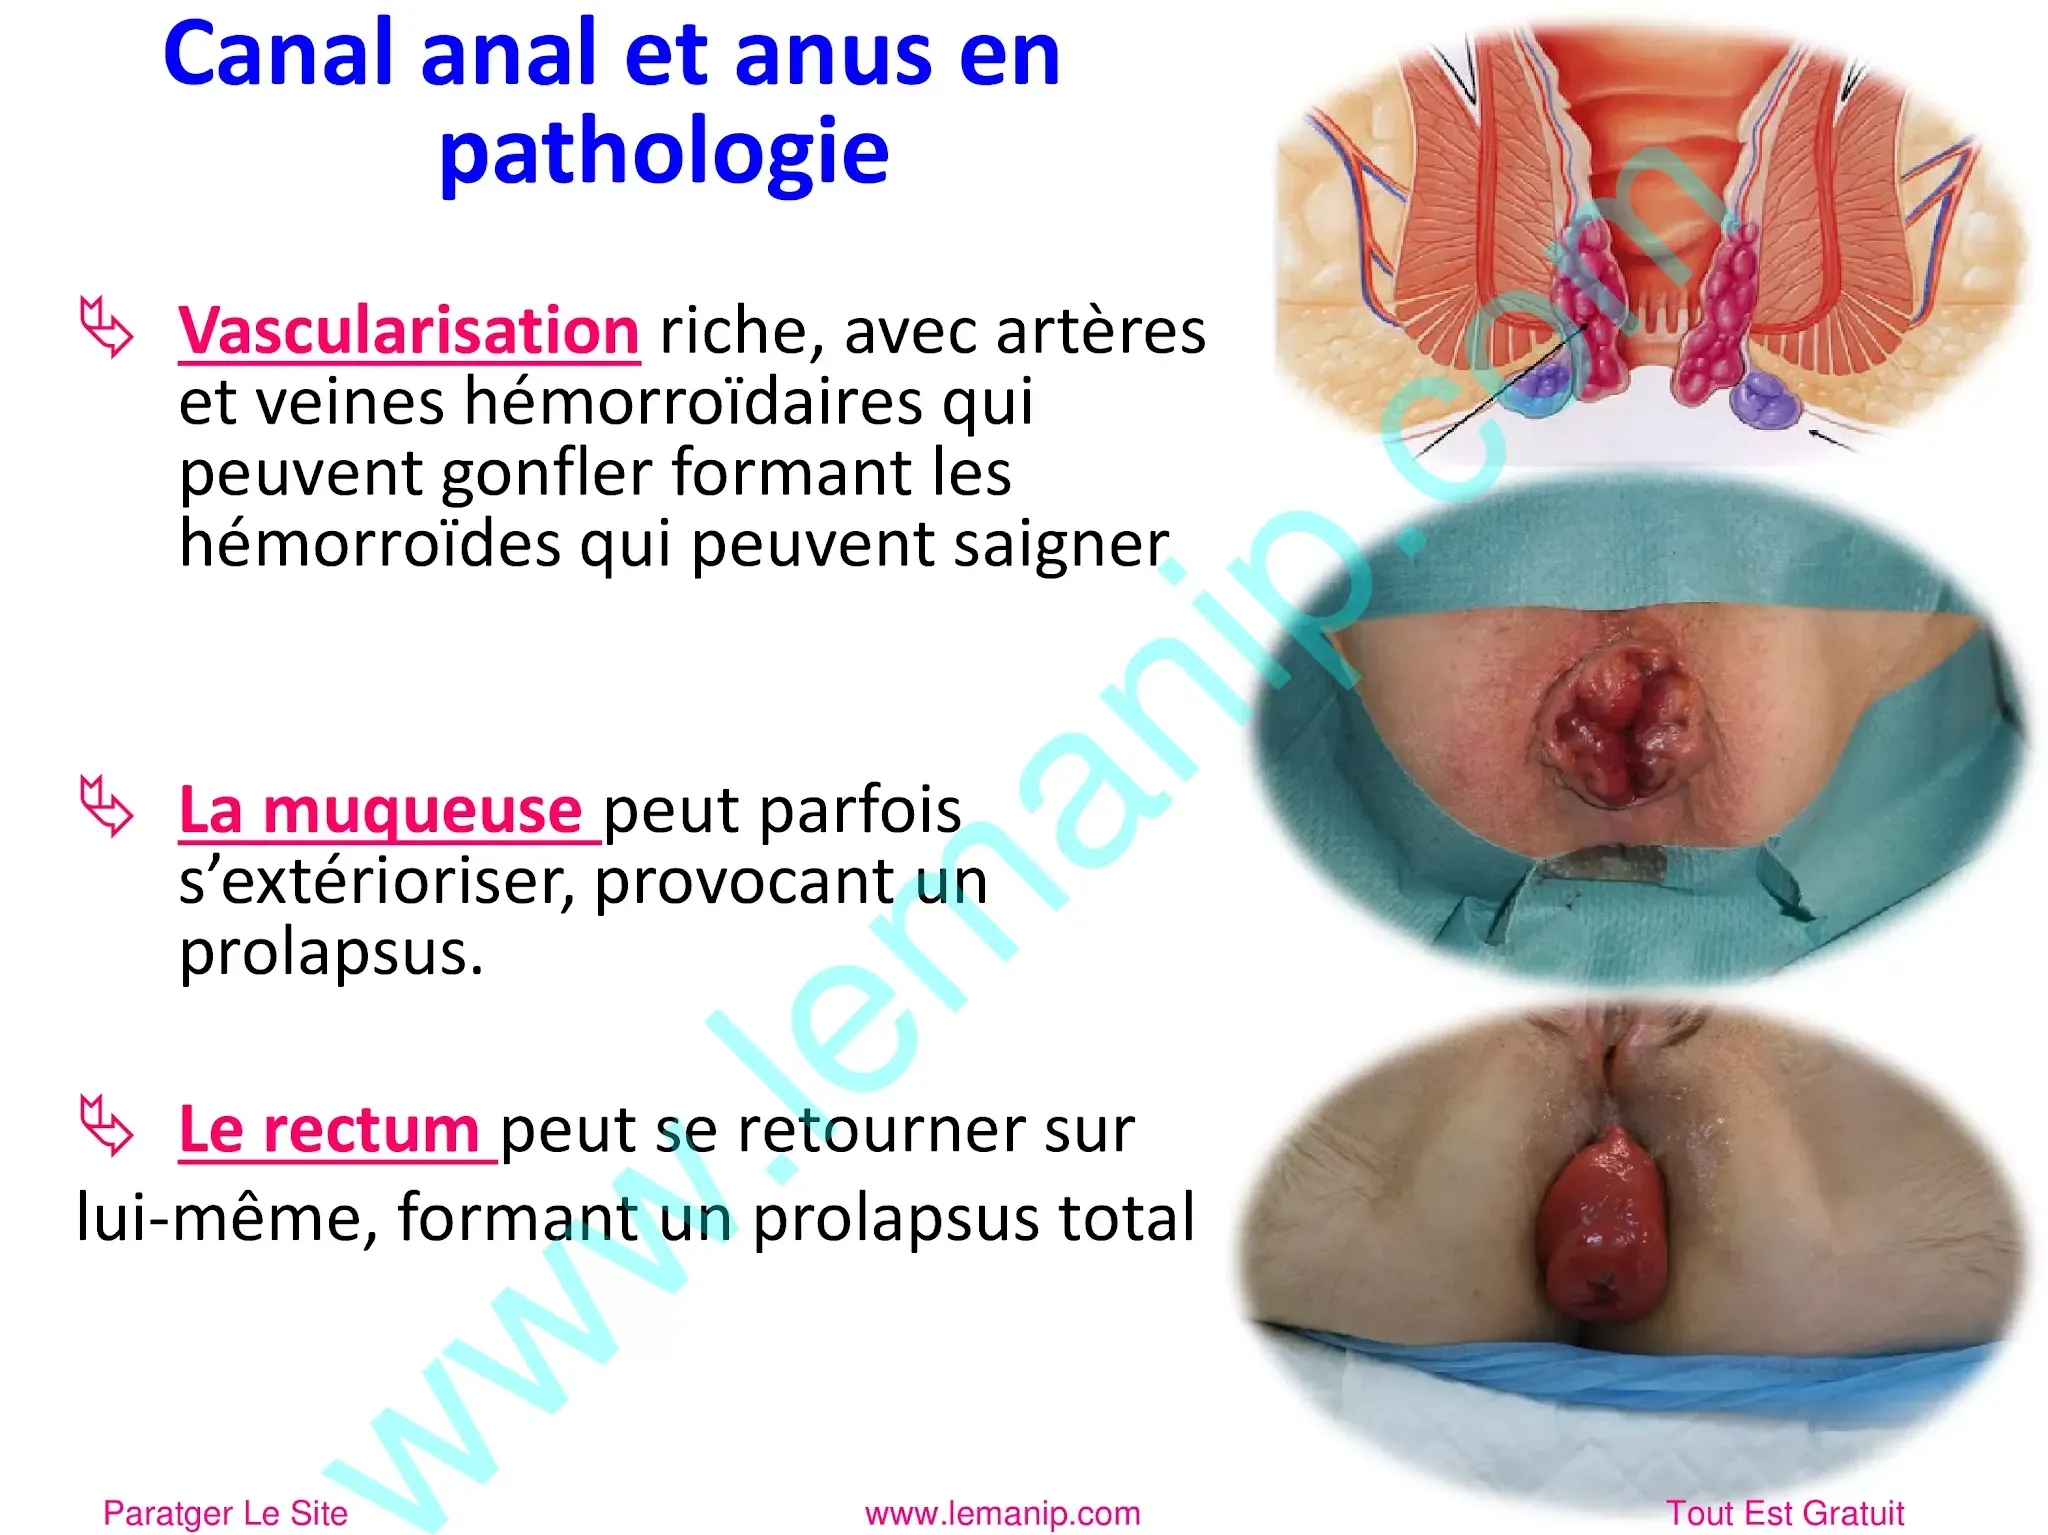 Canal anal, anus et pathologie